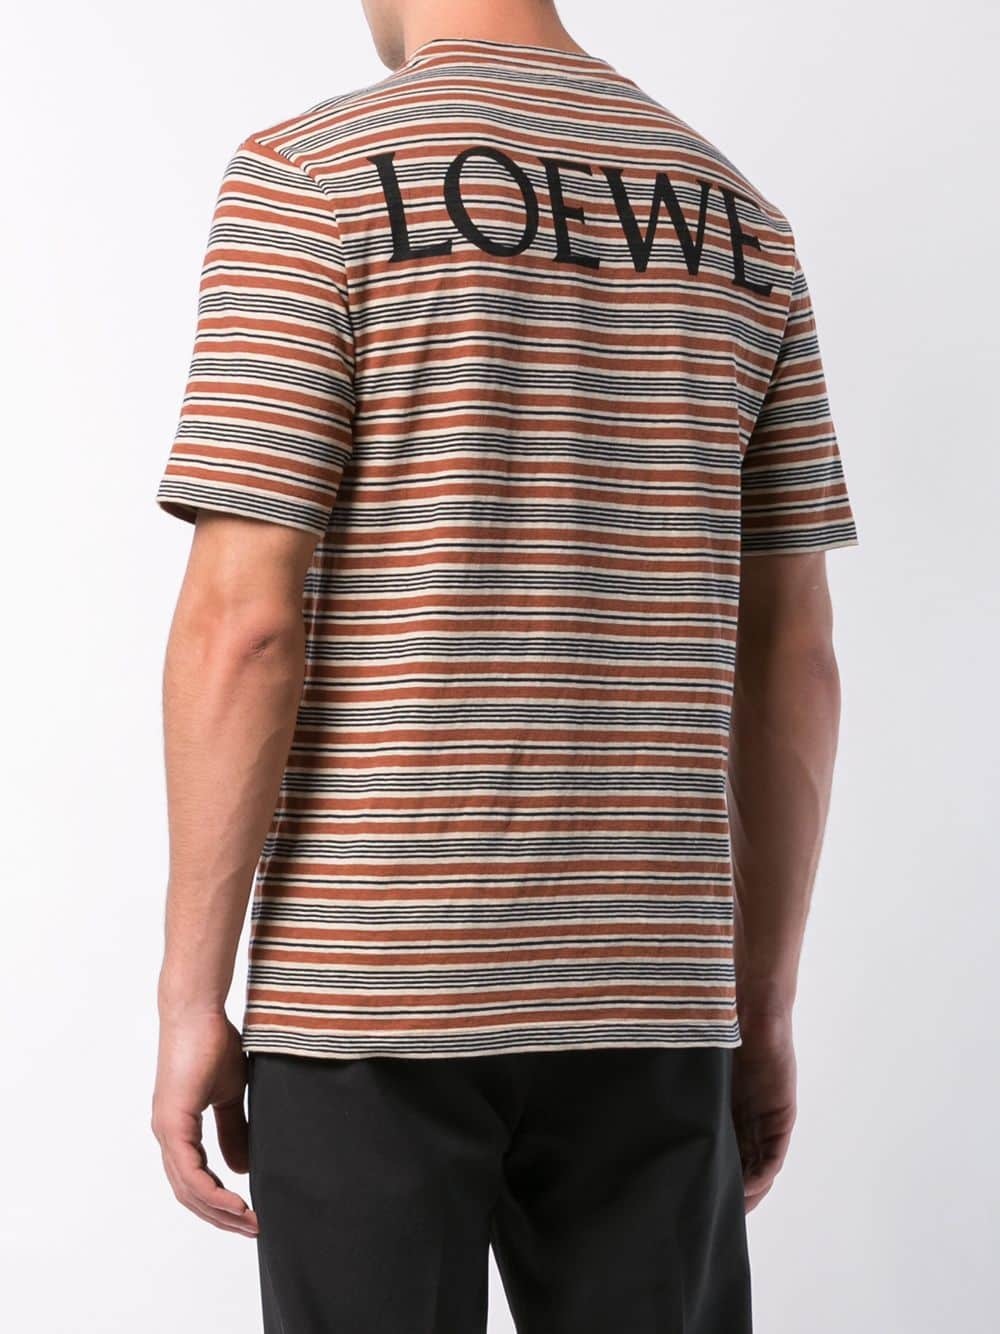 LOEWE 20SS Multicolored Stripe Shirt | www.sapi.org.sg